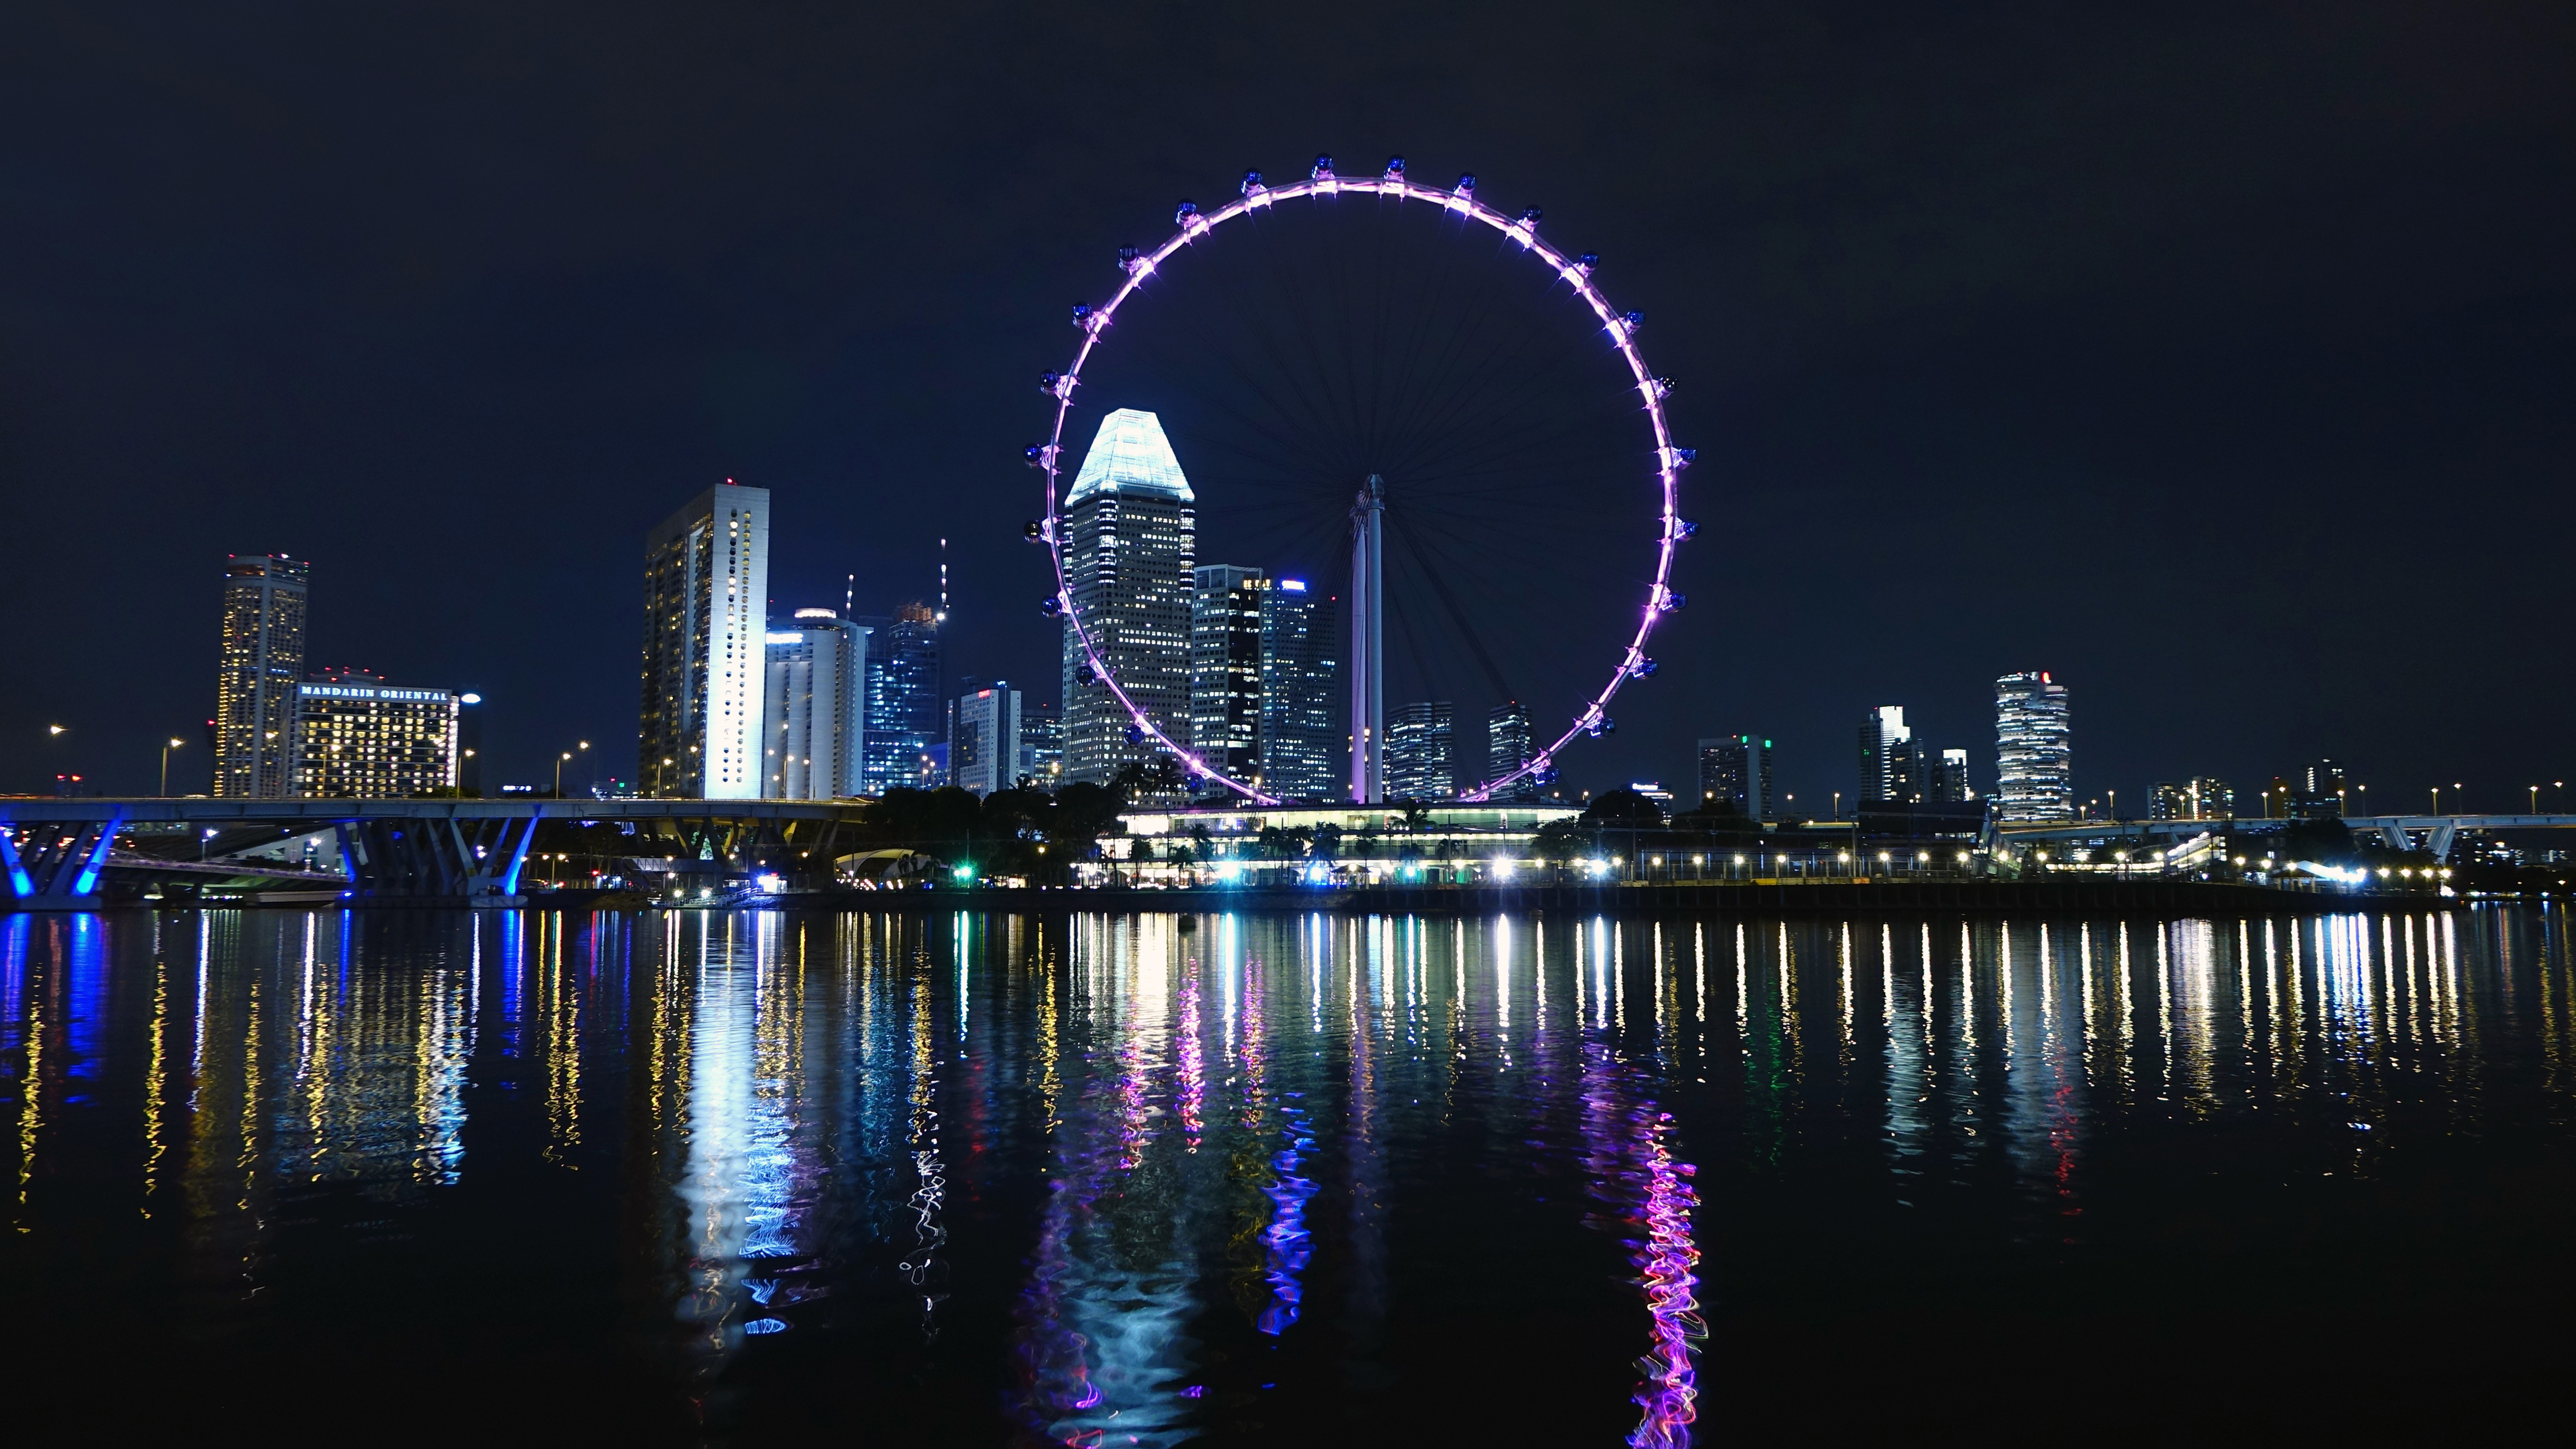 Ferris Wheel Architecture Reflection Night Singapore Singapore Flyer Marina Bay 5120x2880